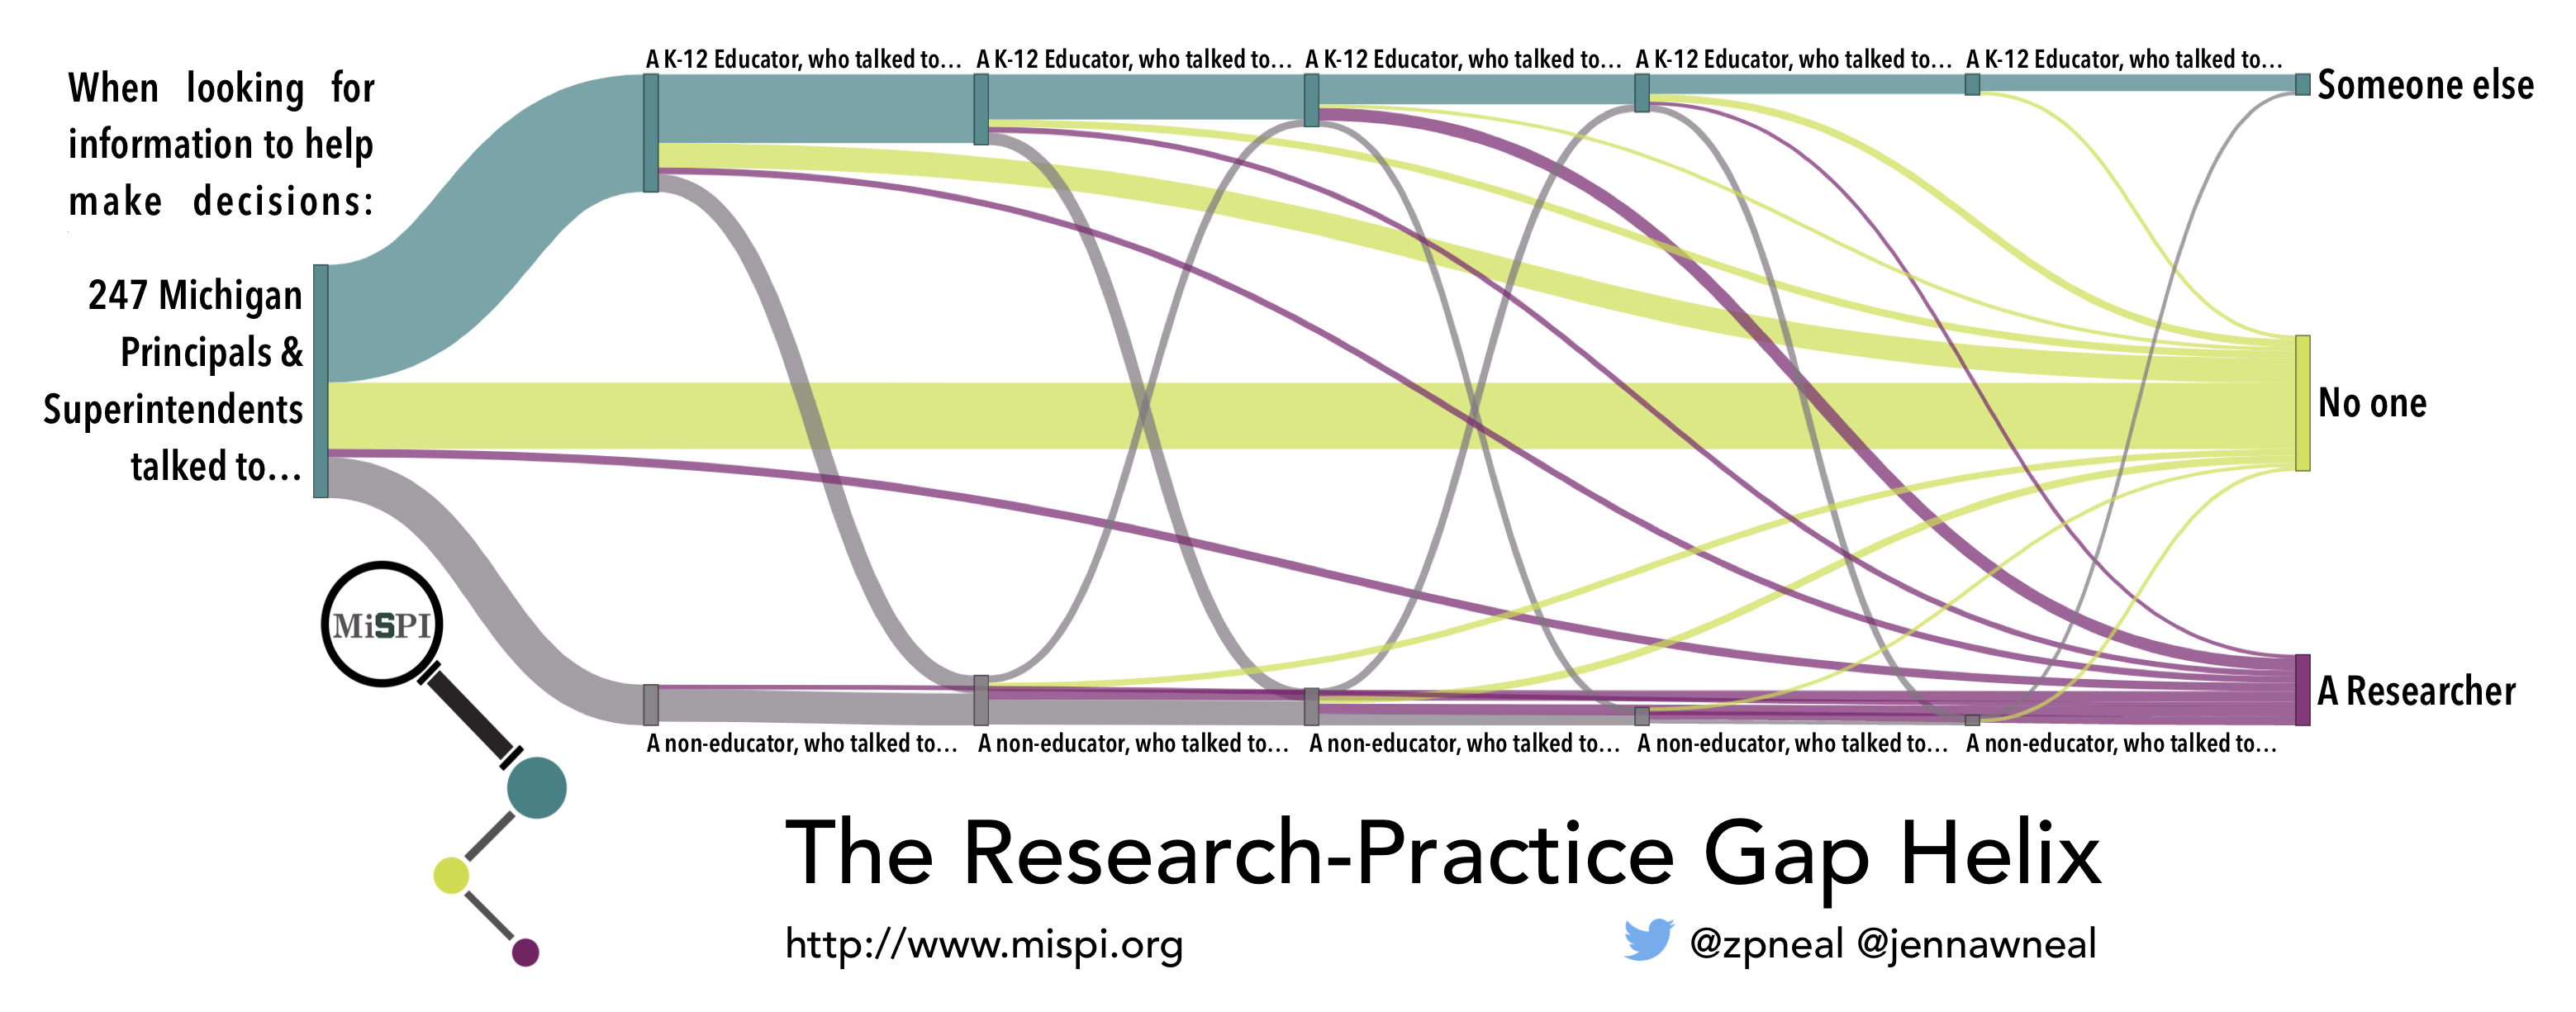 J. Research-Practice Gap Helix